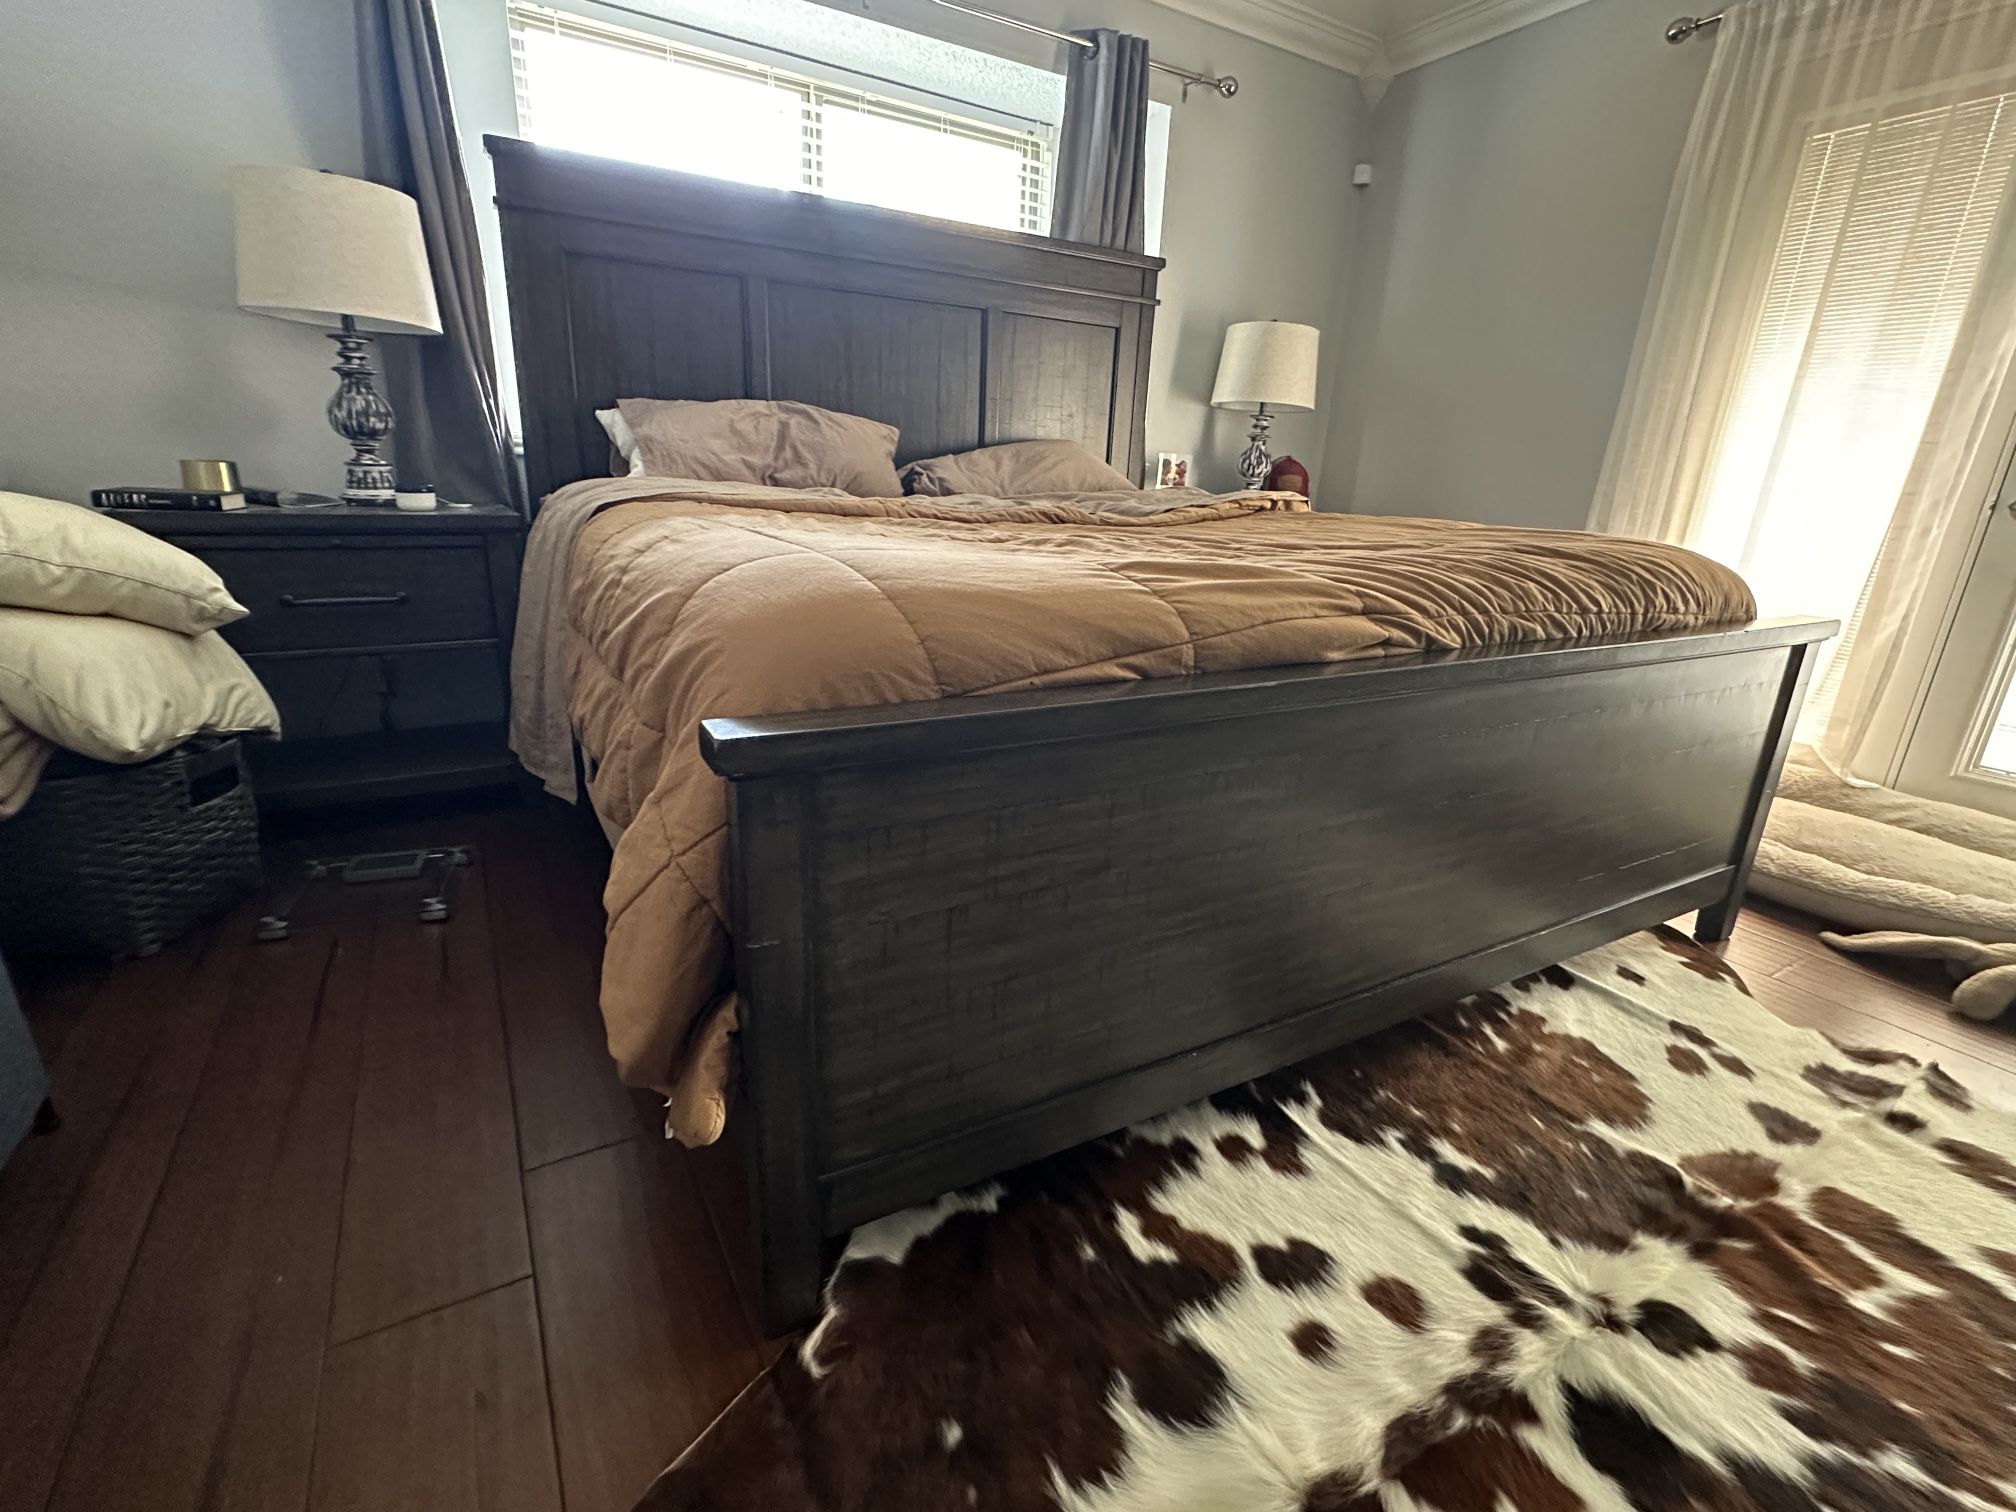 Rustic/ Industrial King Size Bedroom Set